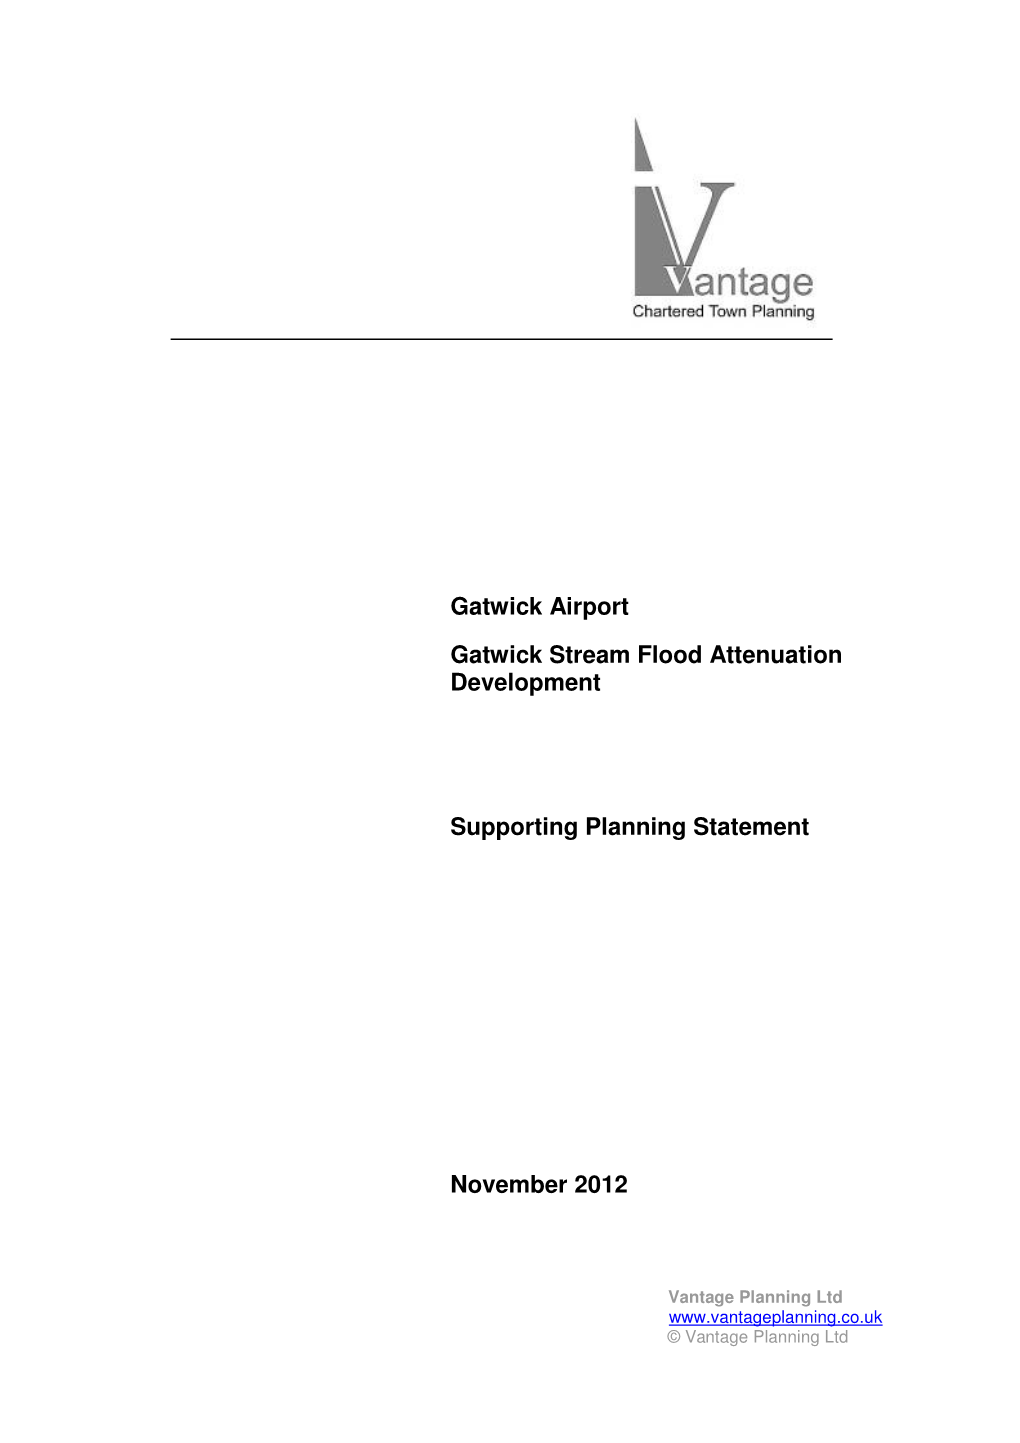 Gatwick Airport Gatwick Stream Flood Attenuation Development